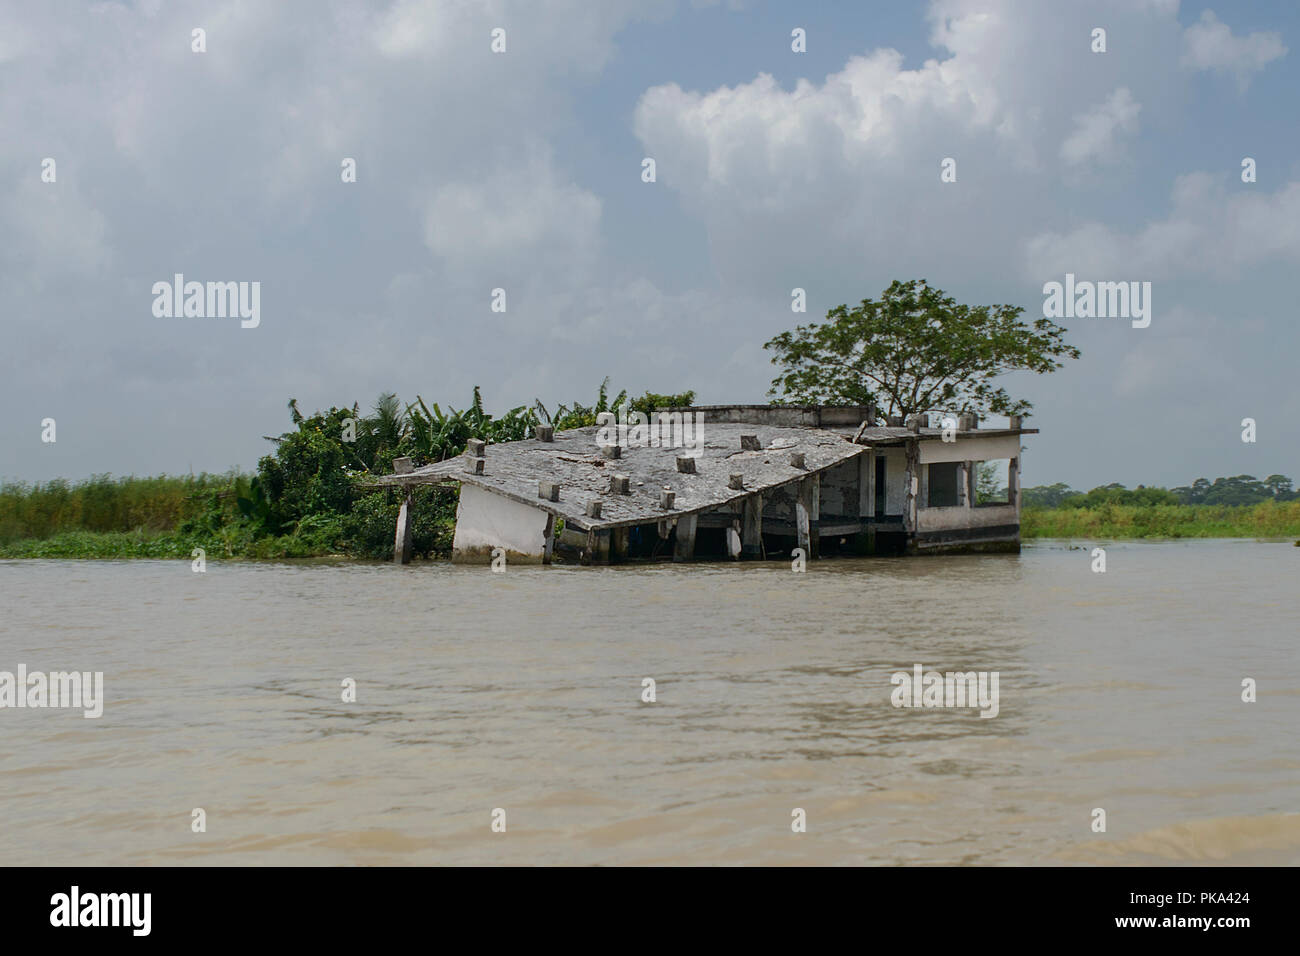 The Terrible Breakdown Of the Padma River in Bangladesh Stock Photo